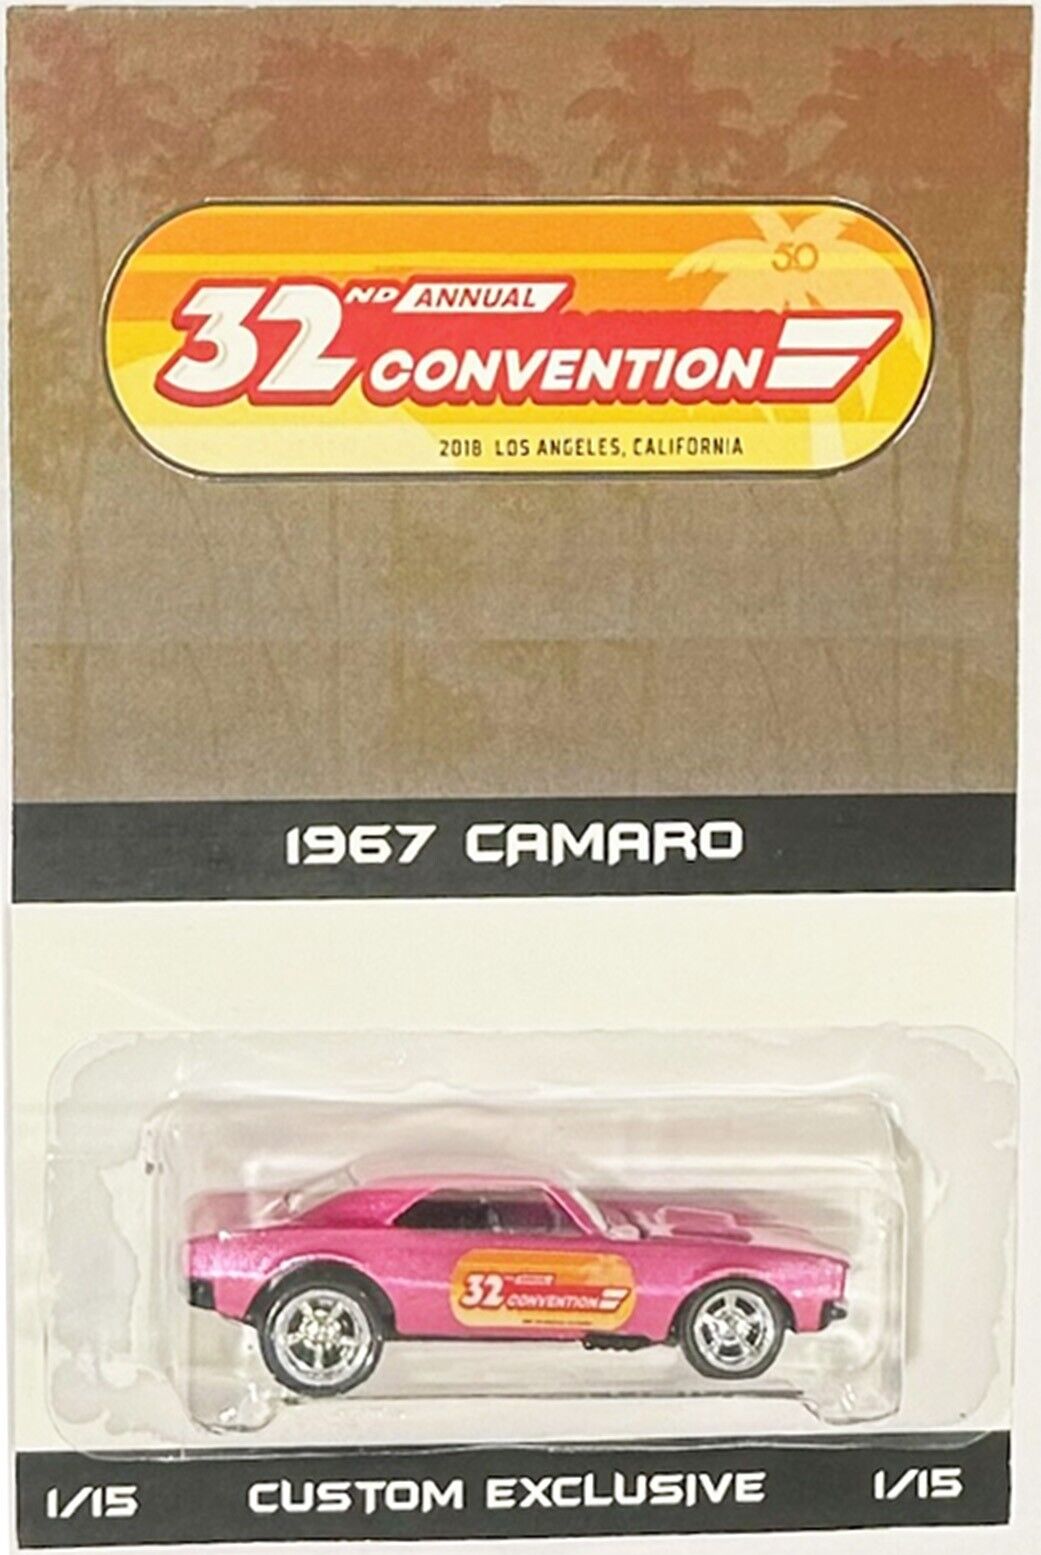 Pink 1967 CHEVY CAMARO CUSTOM Hot Wheels  32nd Annual Convention w/ RR 1/15